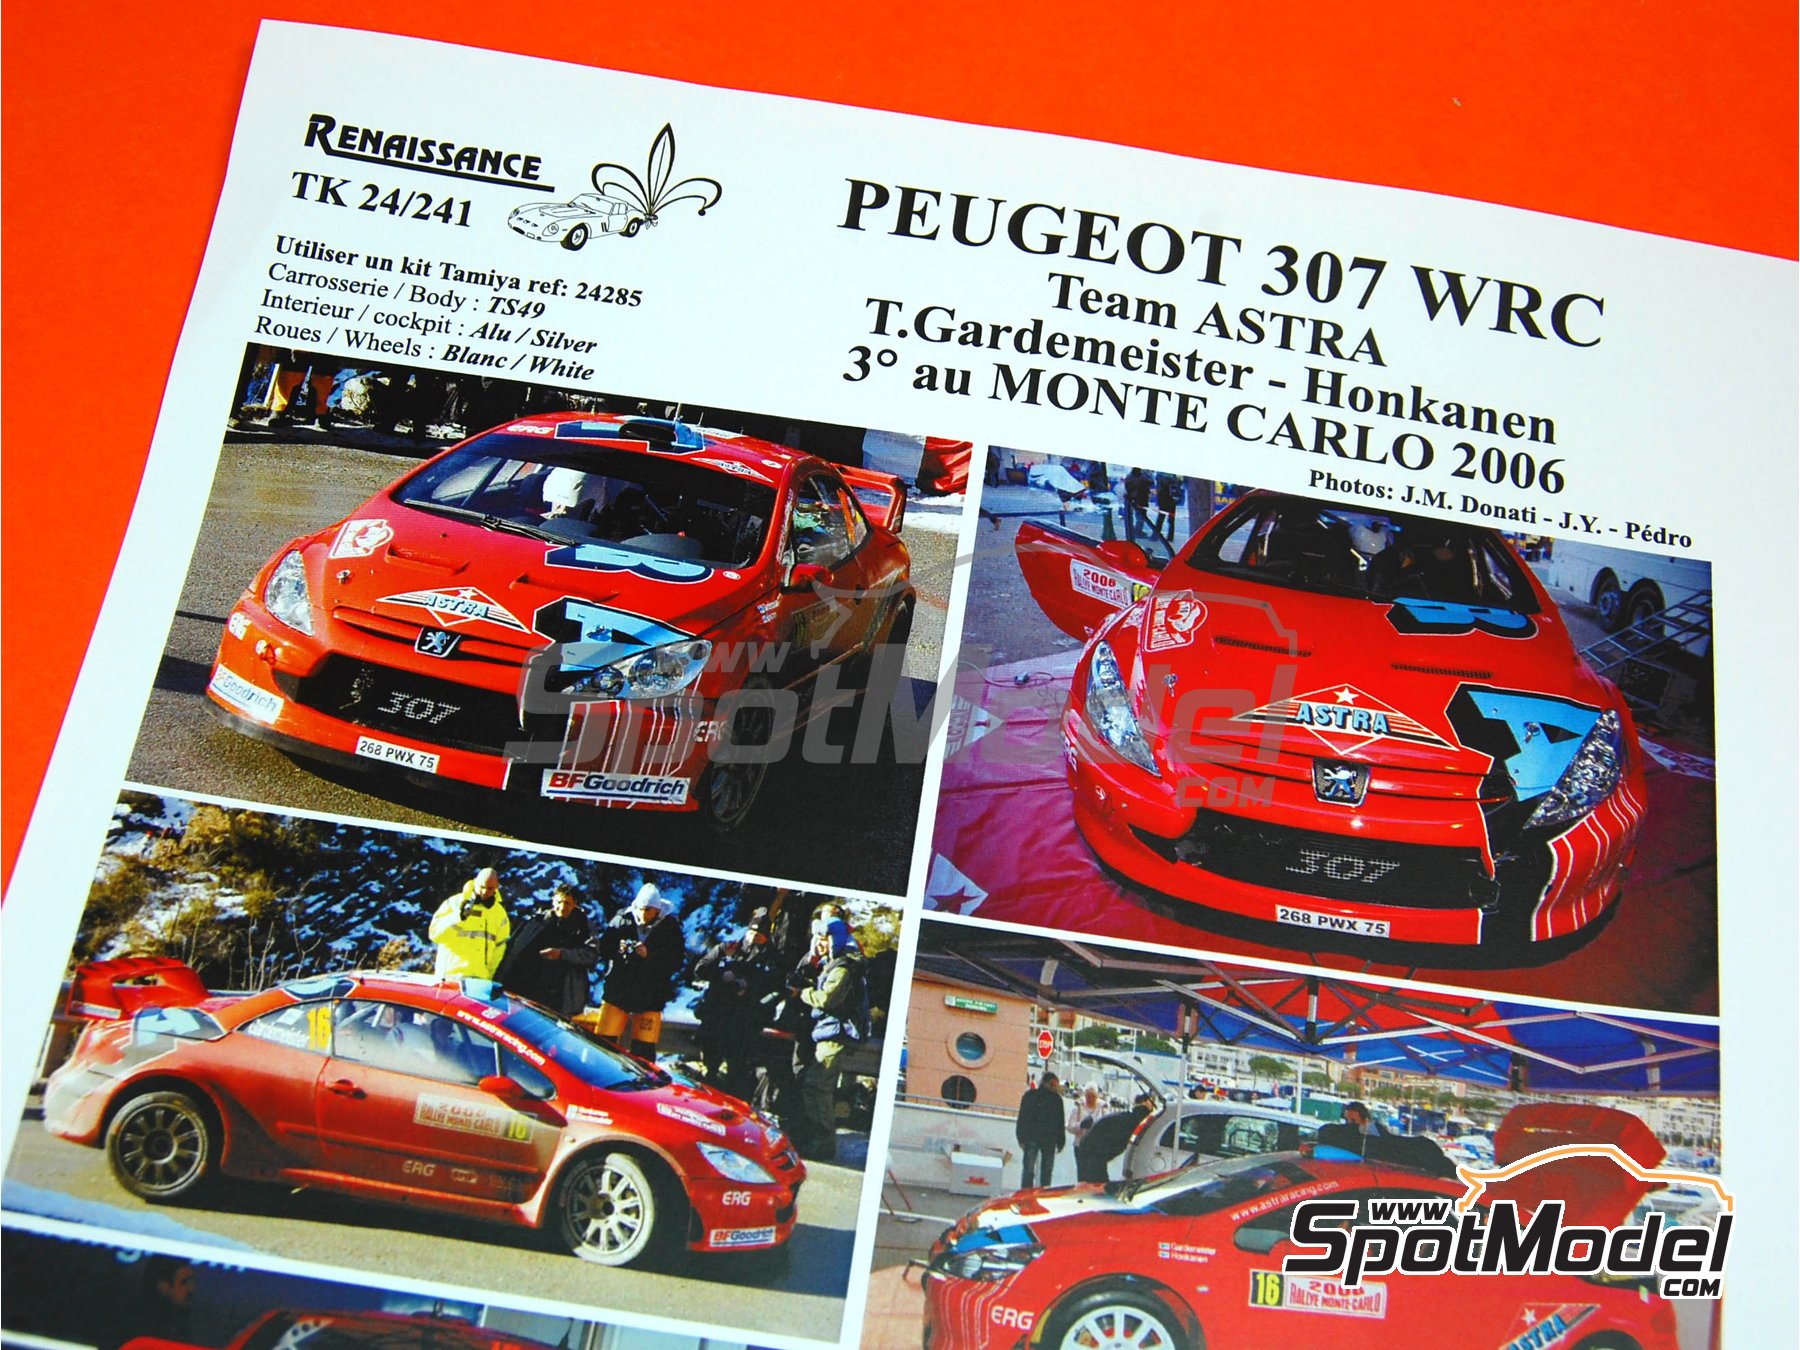 DECALS 1//24 REF 1081 PEUGEOT 307 WRC STOHL TOUR DE CORSE 2006 RALLYE RALLY